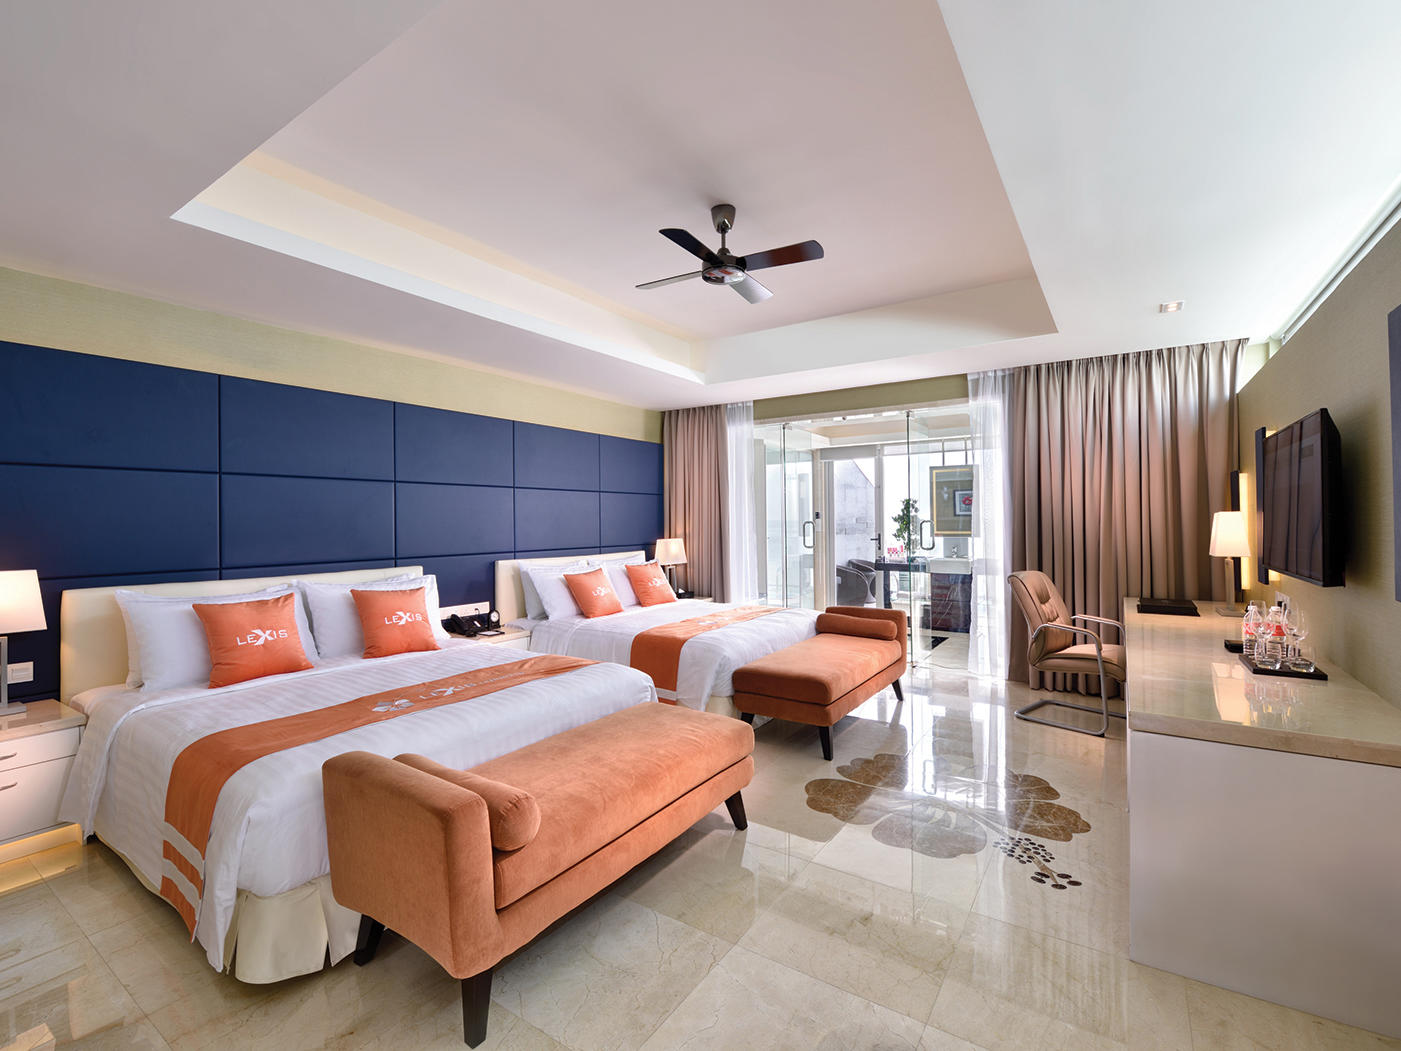 Lexis® Hibiscus Port Dickson | 5-Star Luxury Beach Resort